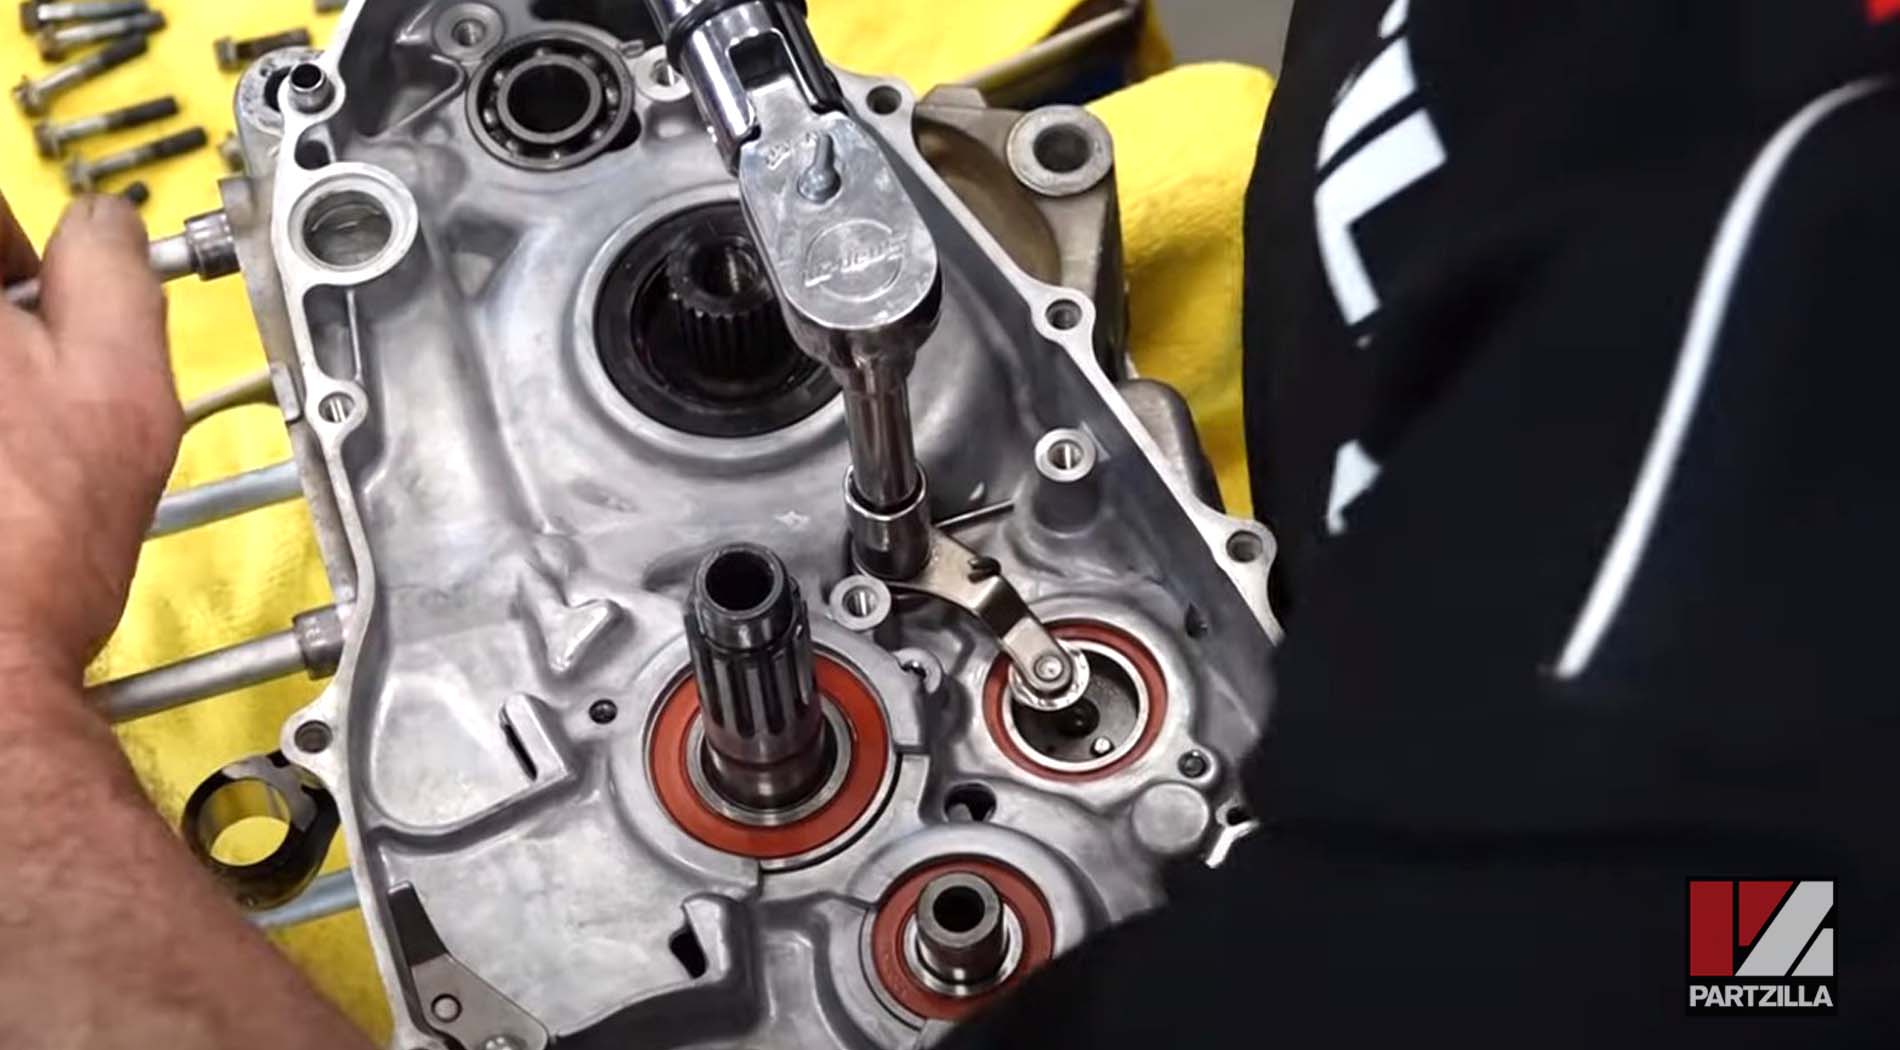 Honda CRF450 engine rebuild shifter